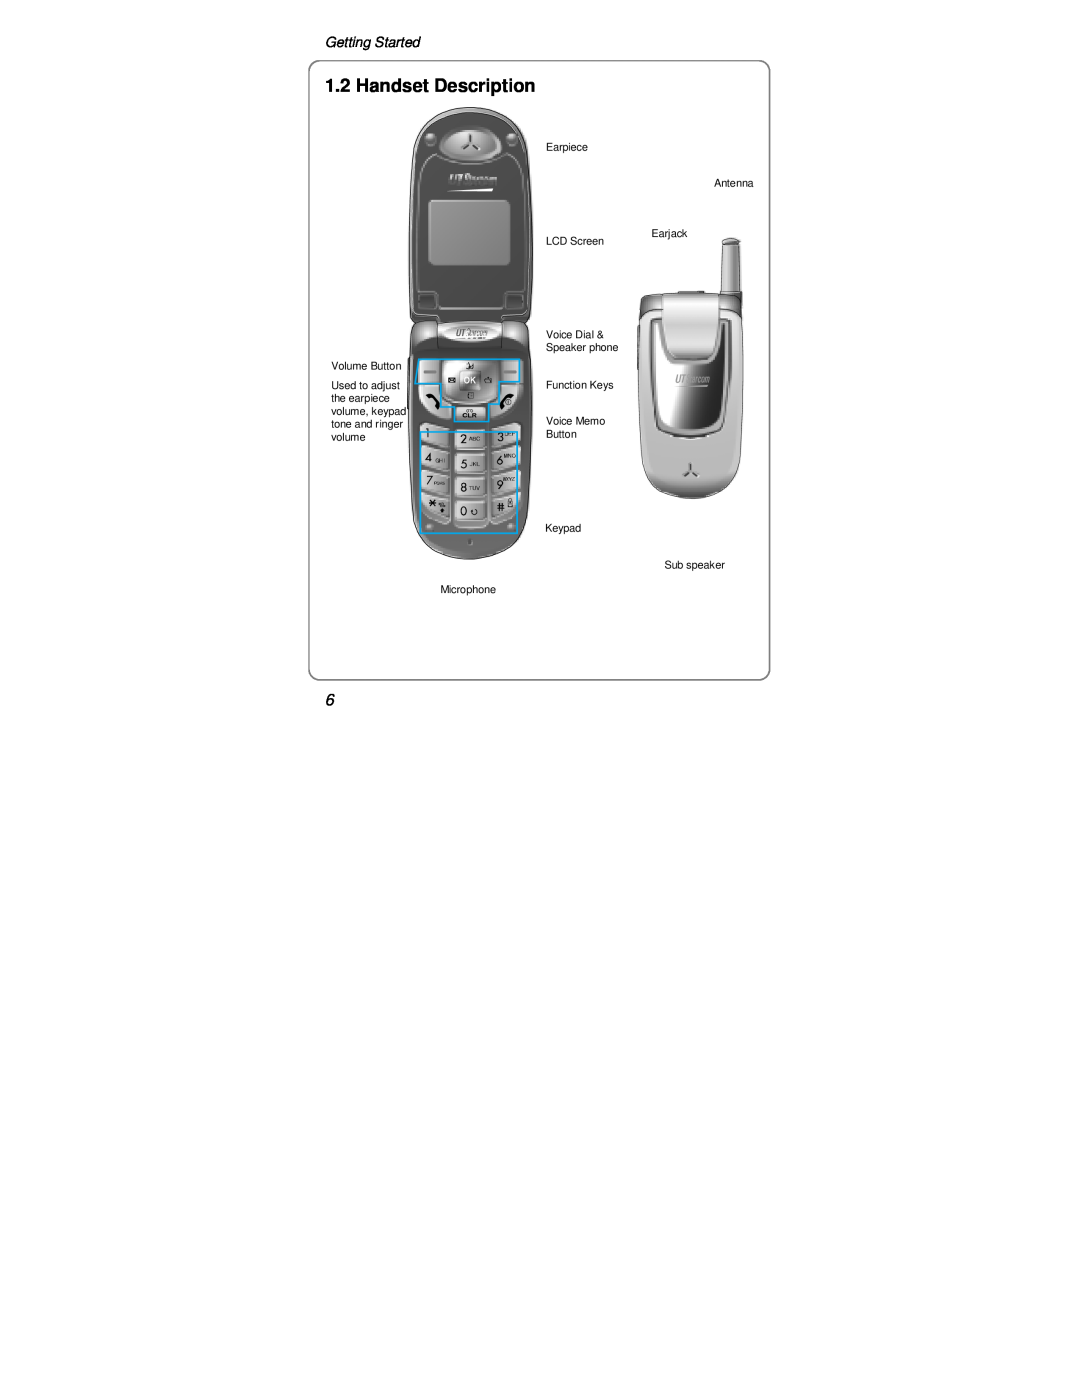 UTStarcom warranty Handset Description, Getting Started, Volume Button, Microphone, Voice Memo Button Keypad 